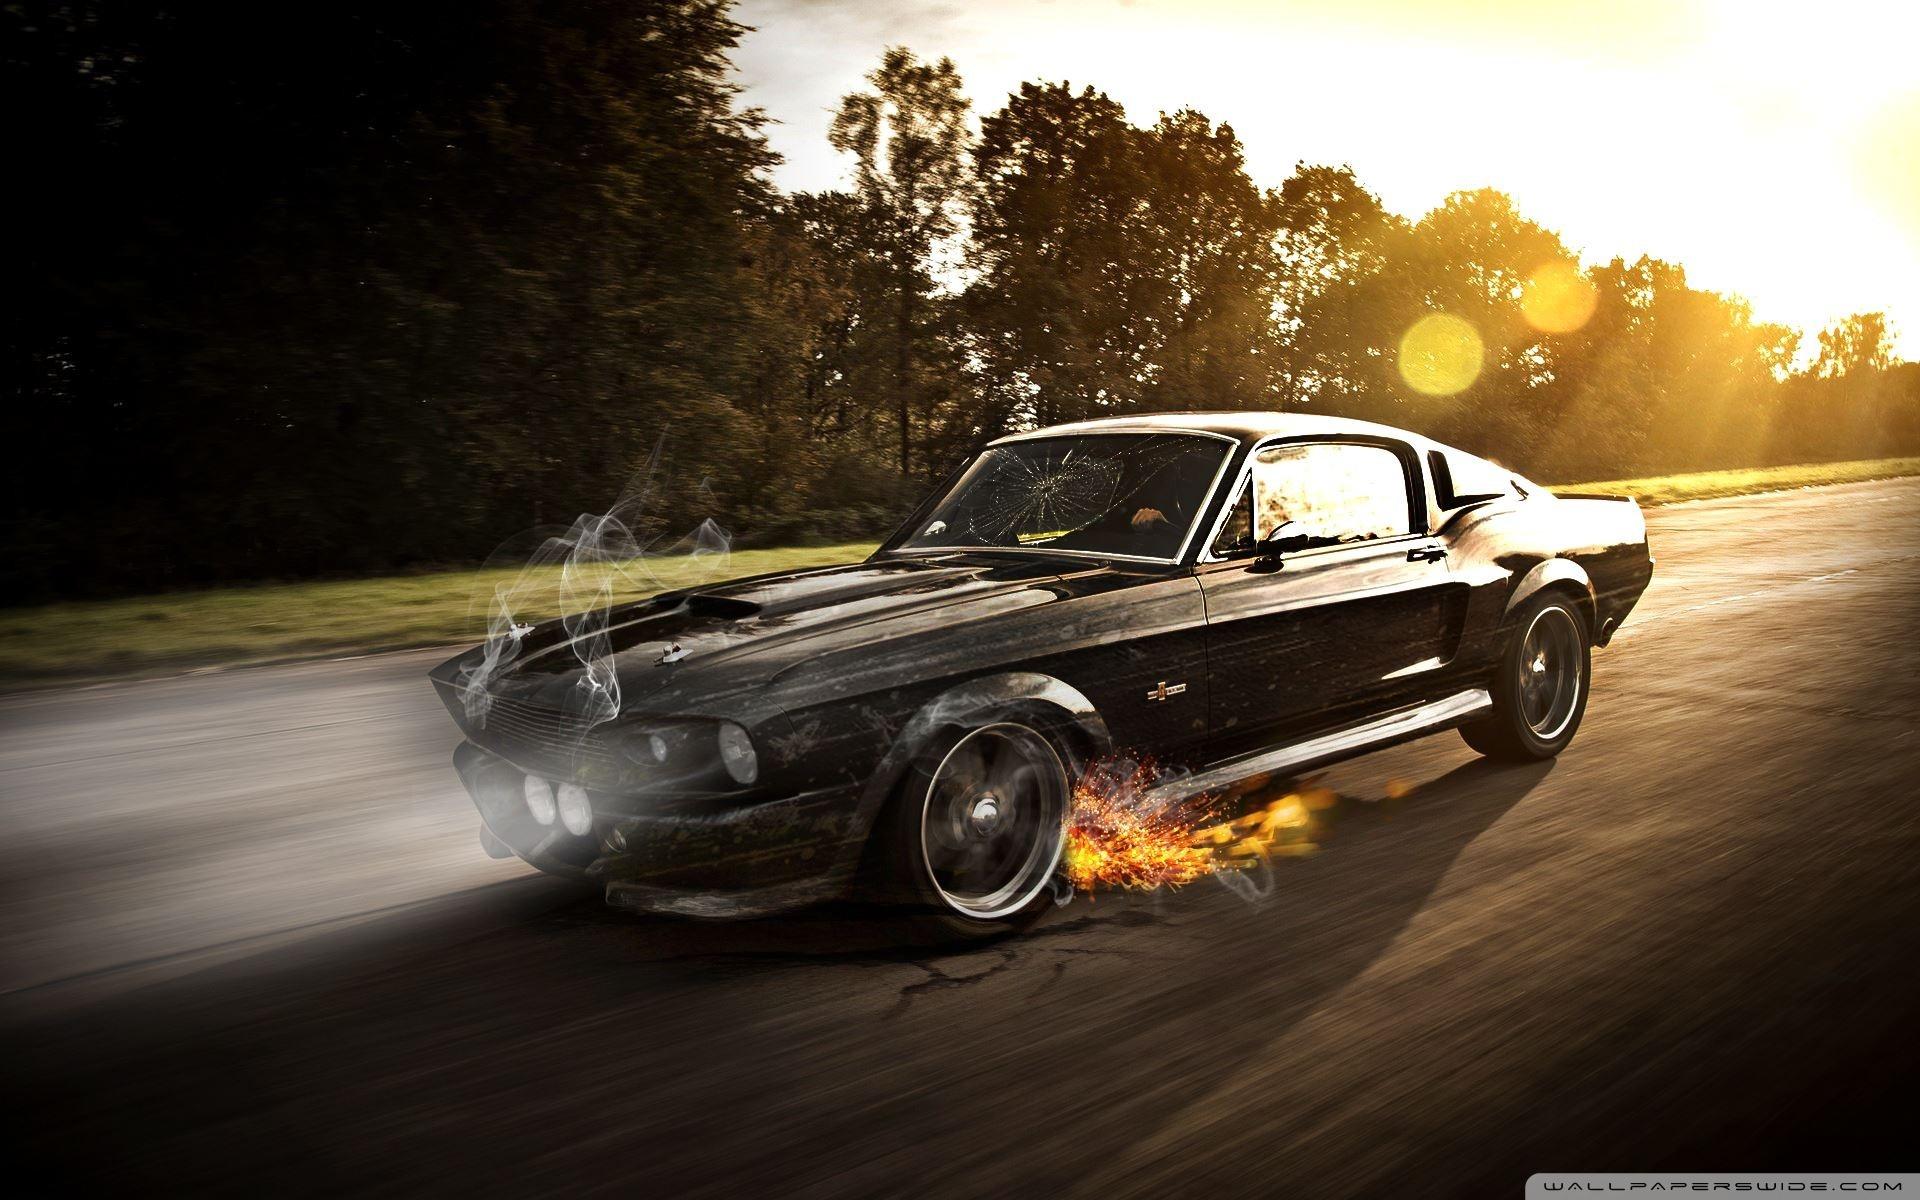 Mustang GT Fastback Ultra HD Desktop Backgrounds Wallpapers for 4K